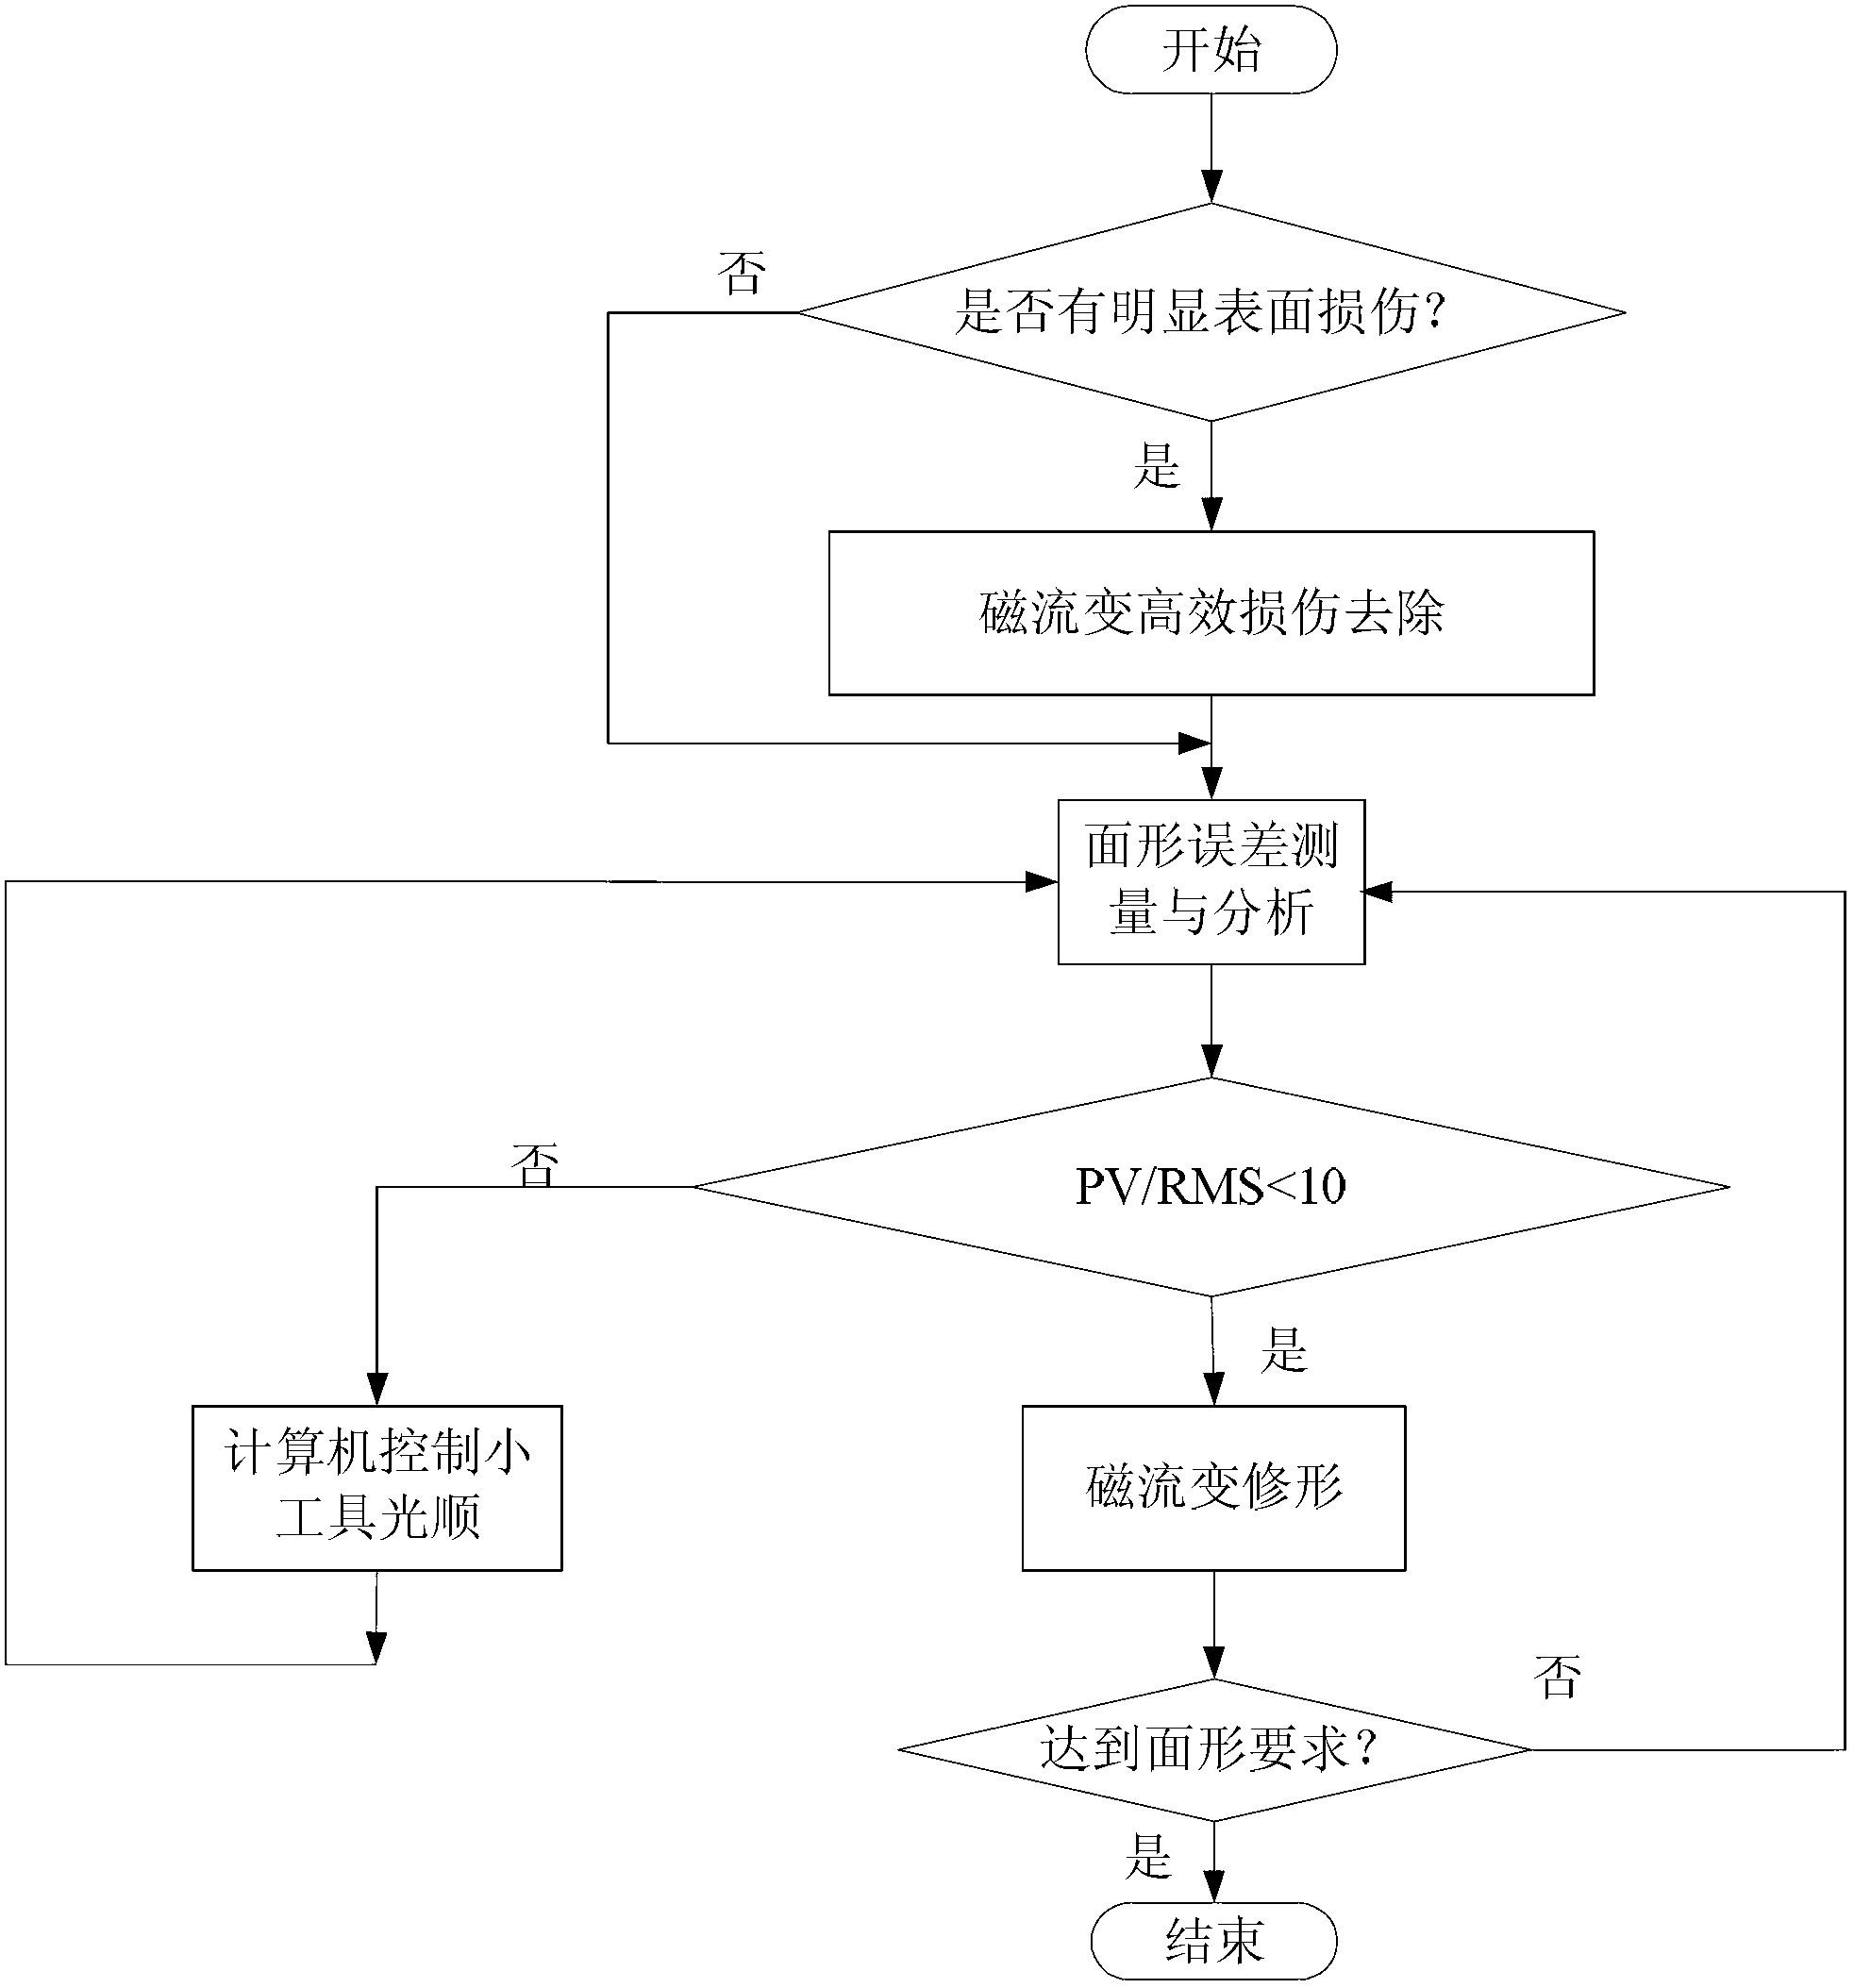 Short flow processing method of aspheric optical element